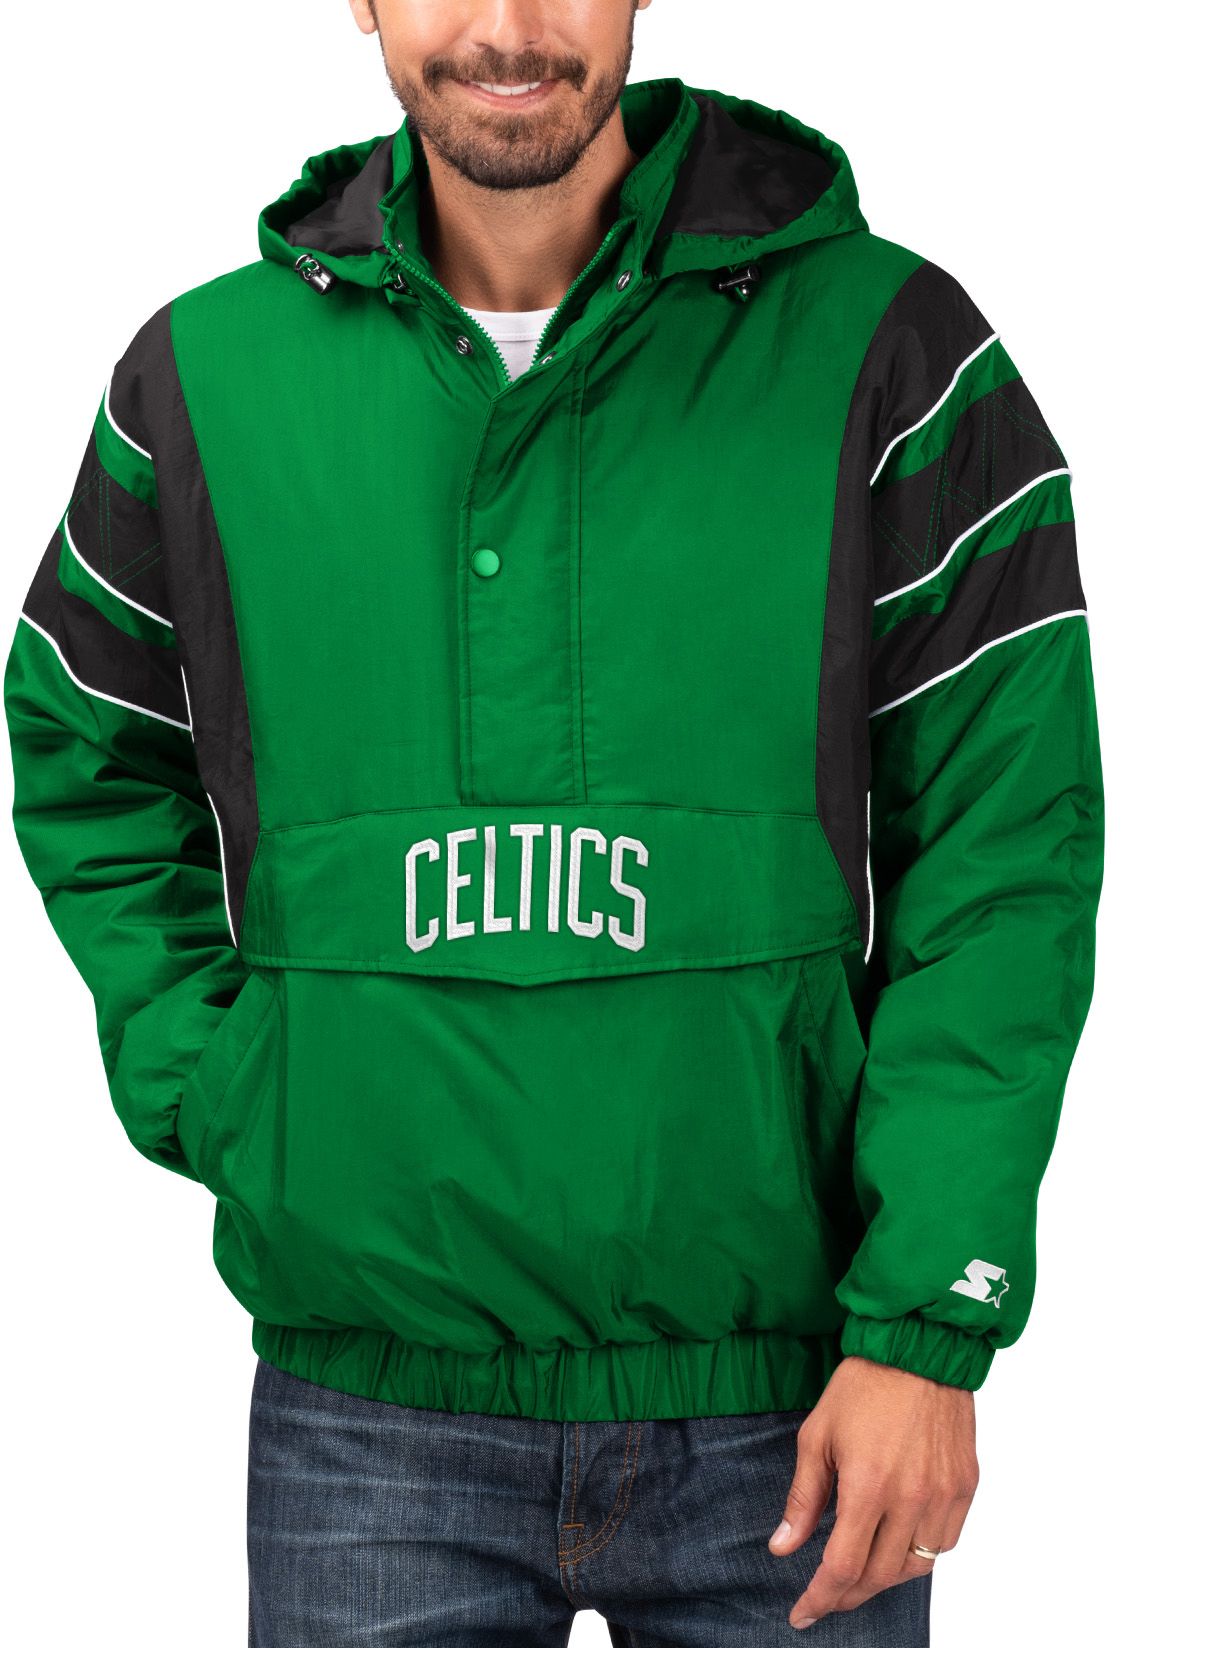 boston celtics starter jacket